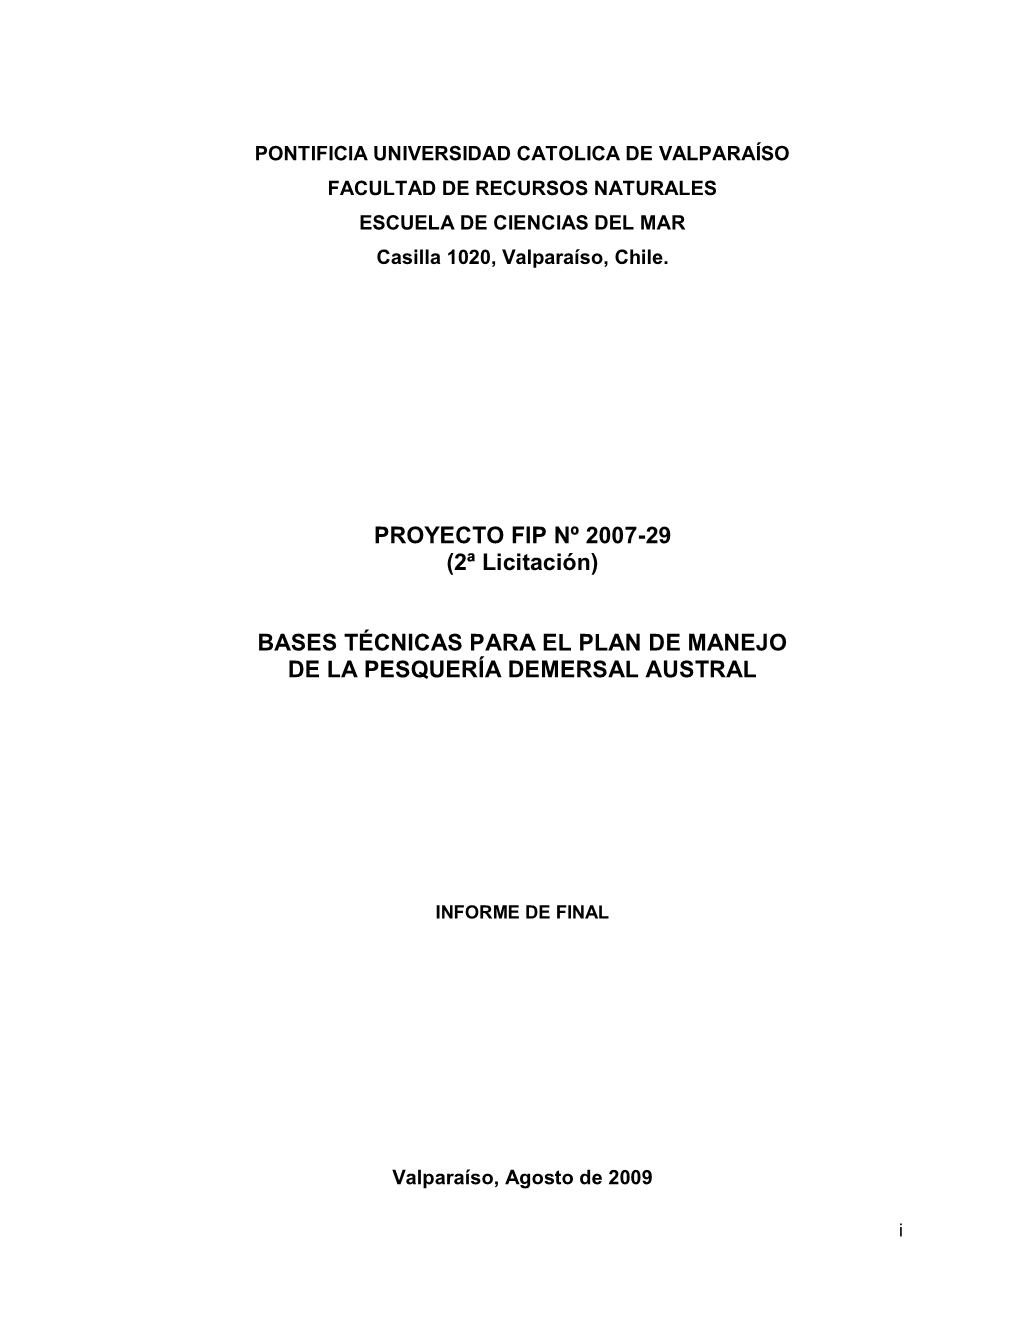 PROYECTO FIP Nº 2007-29 (2ª Licitación)